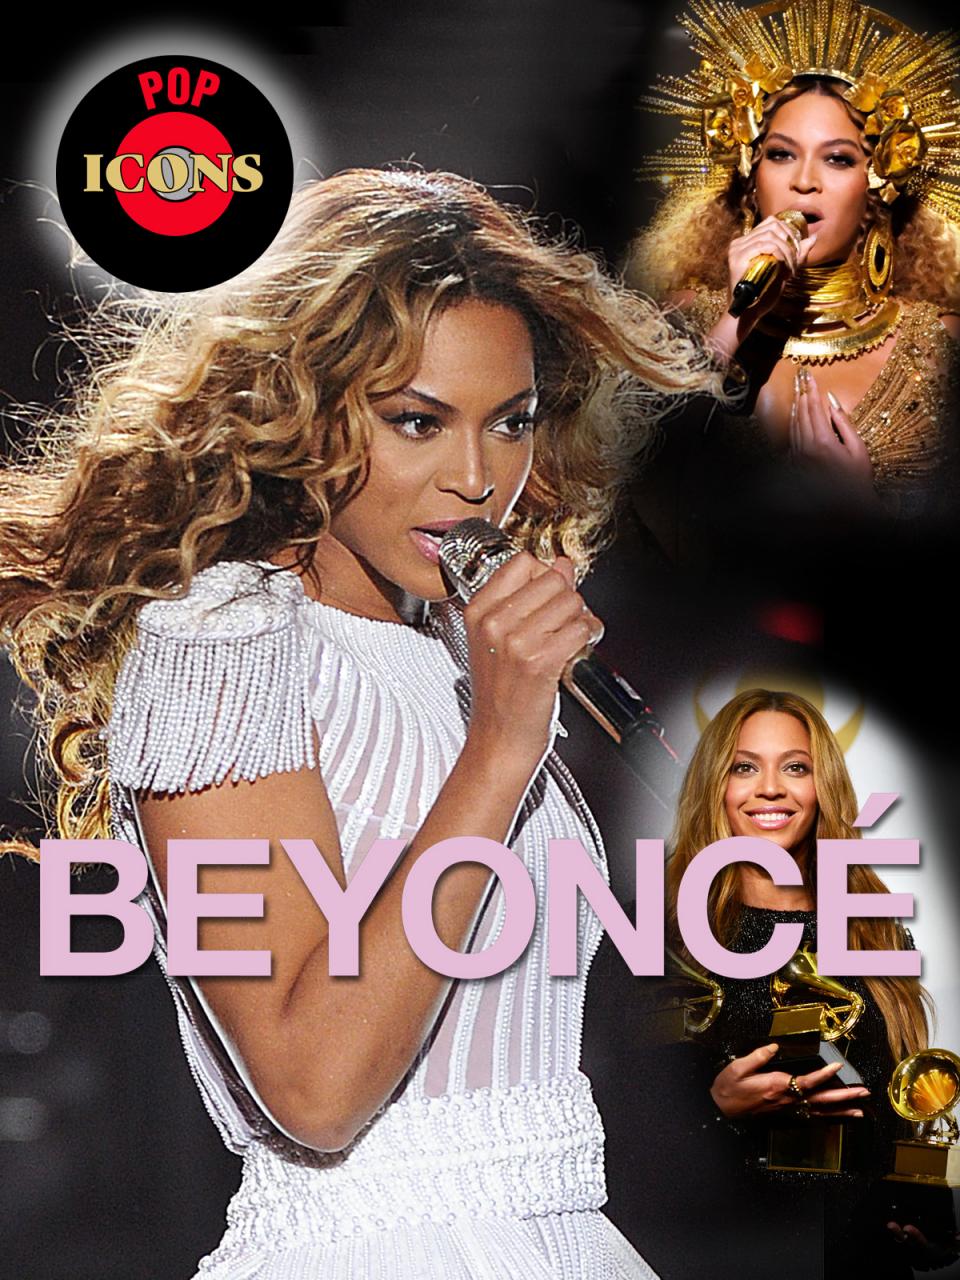 Pop Icons: Beyonce